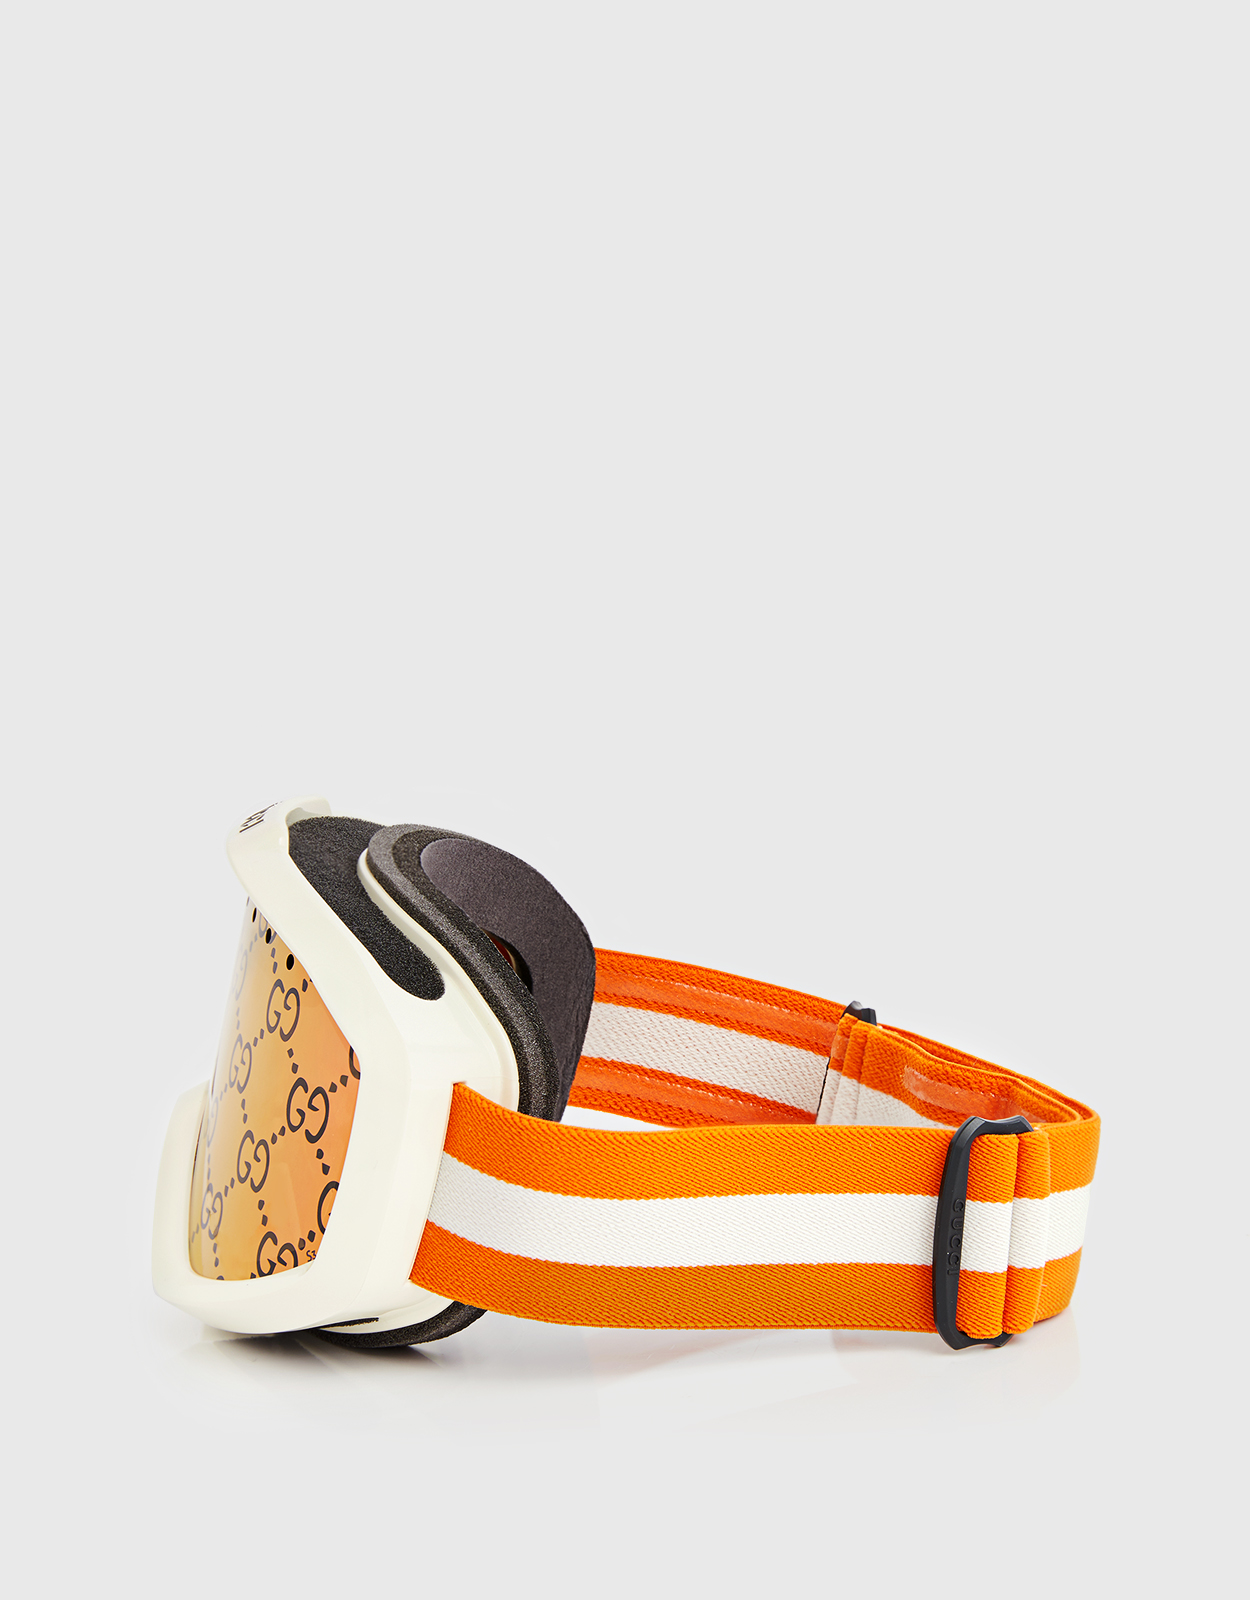 Gucci GG Ski Mask (Sunglasses)